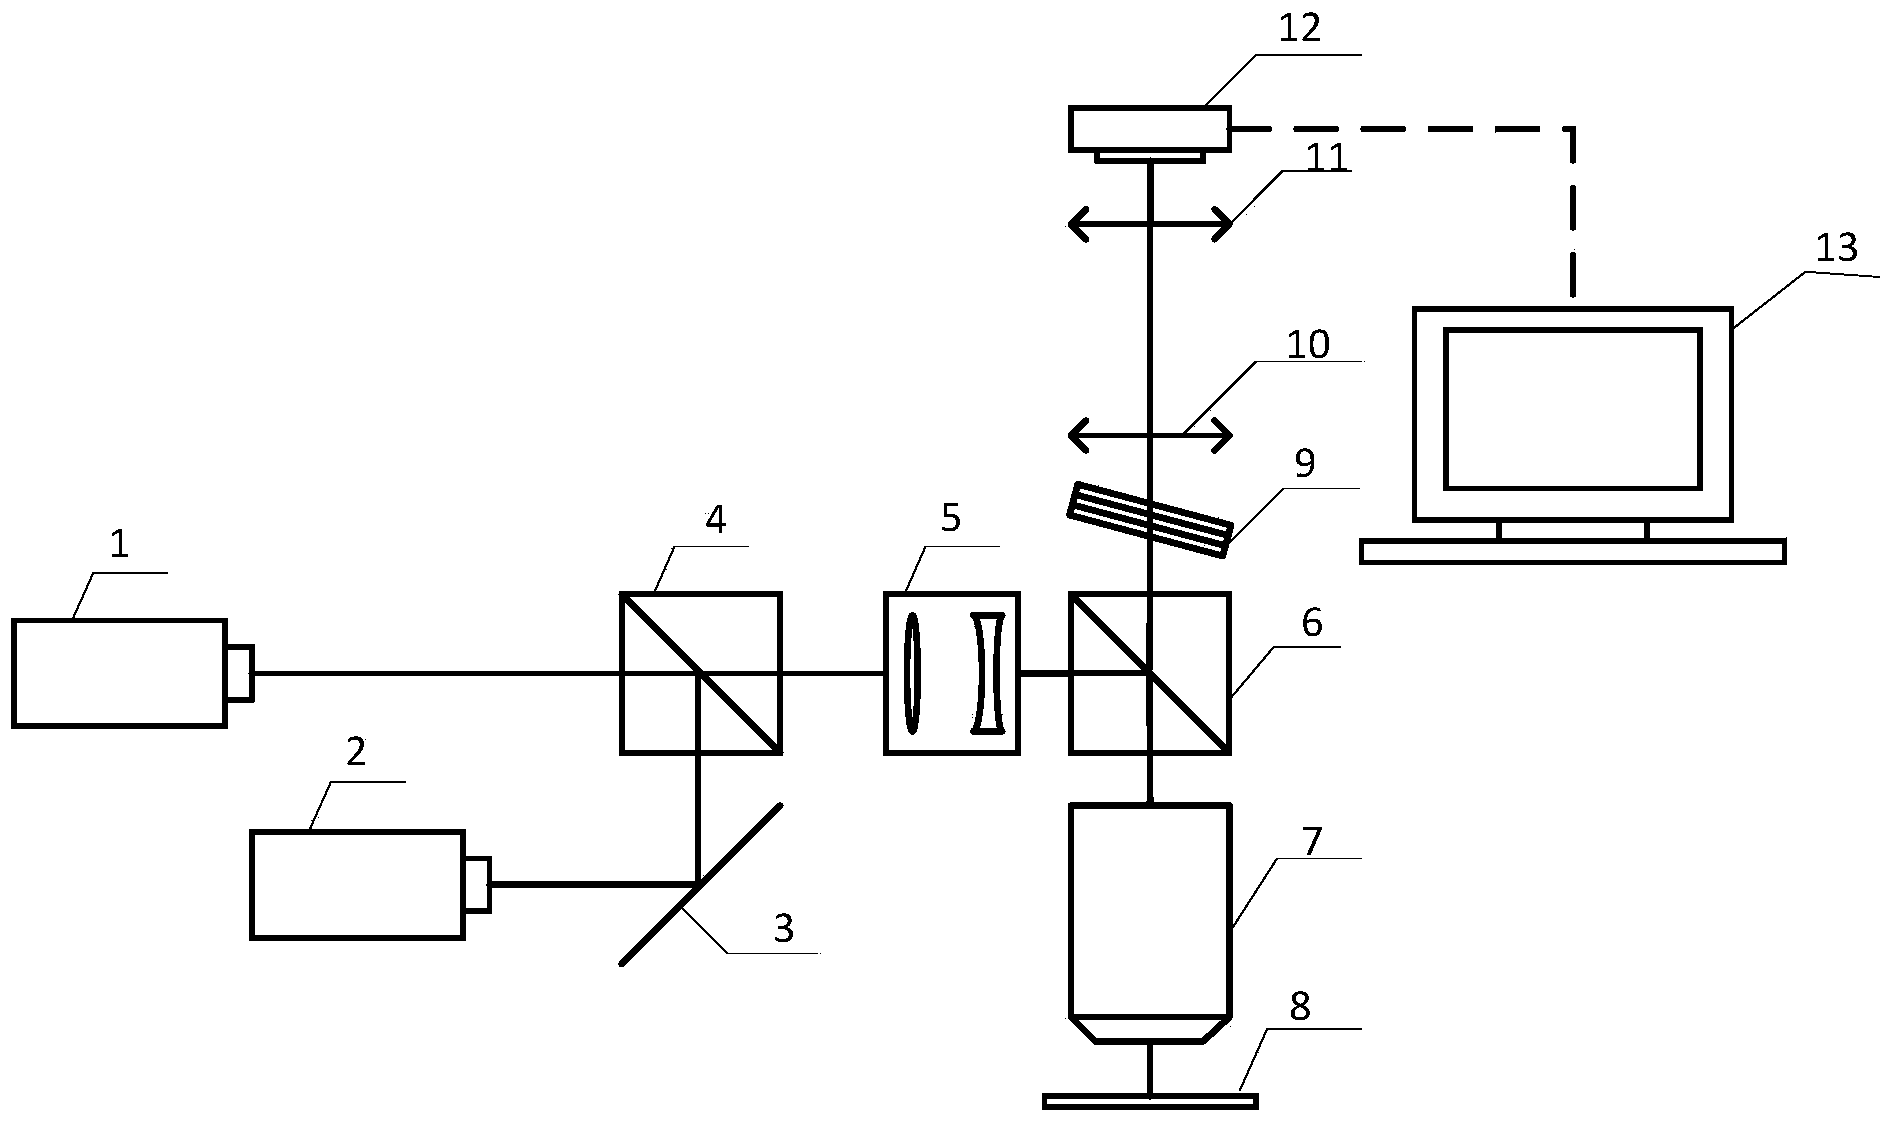 Random positioning super-resolution microscopy method and device based on fluorescence-emission kill mechanism